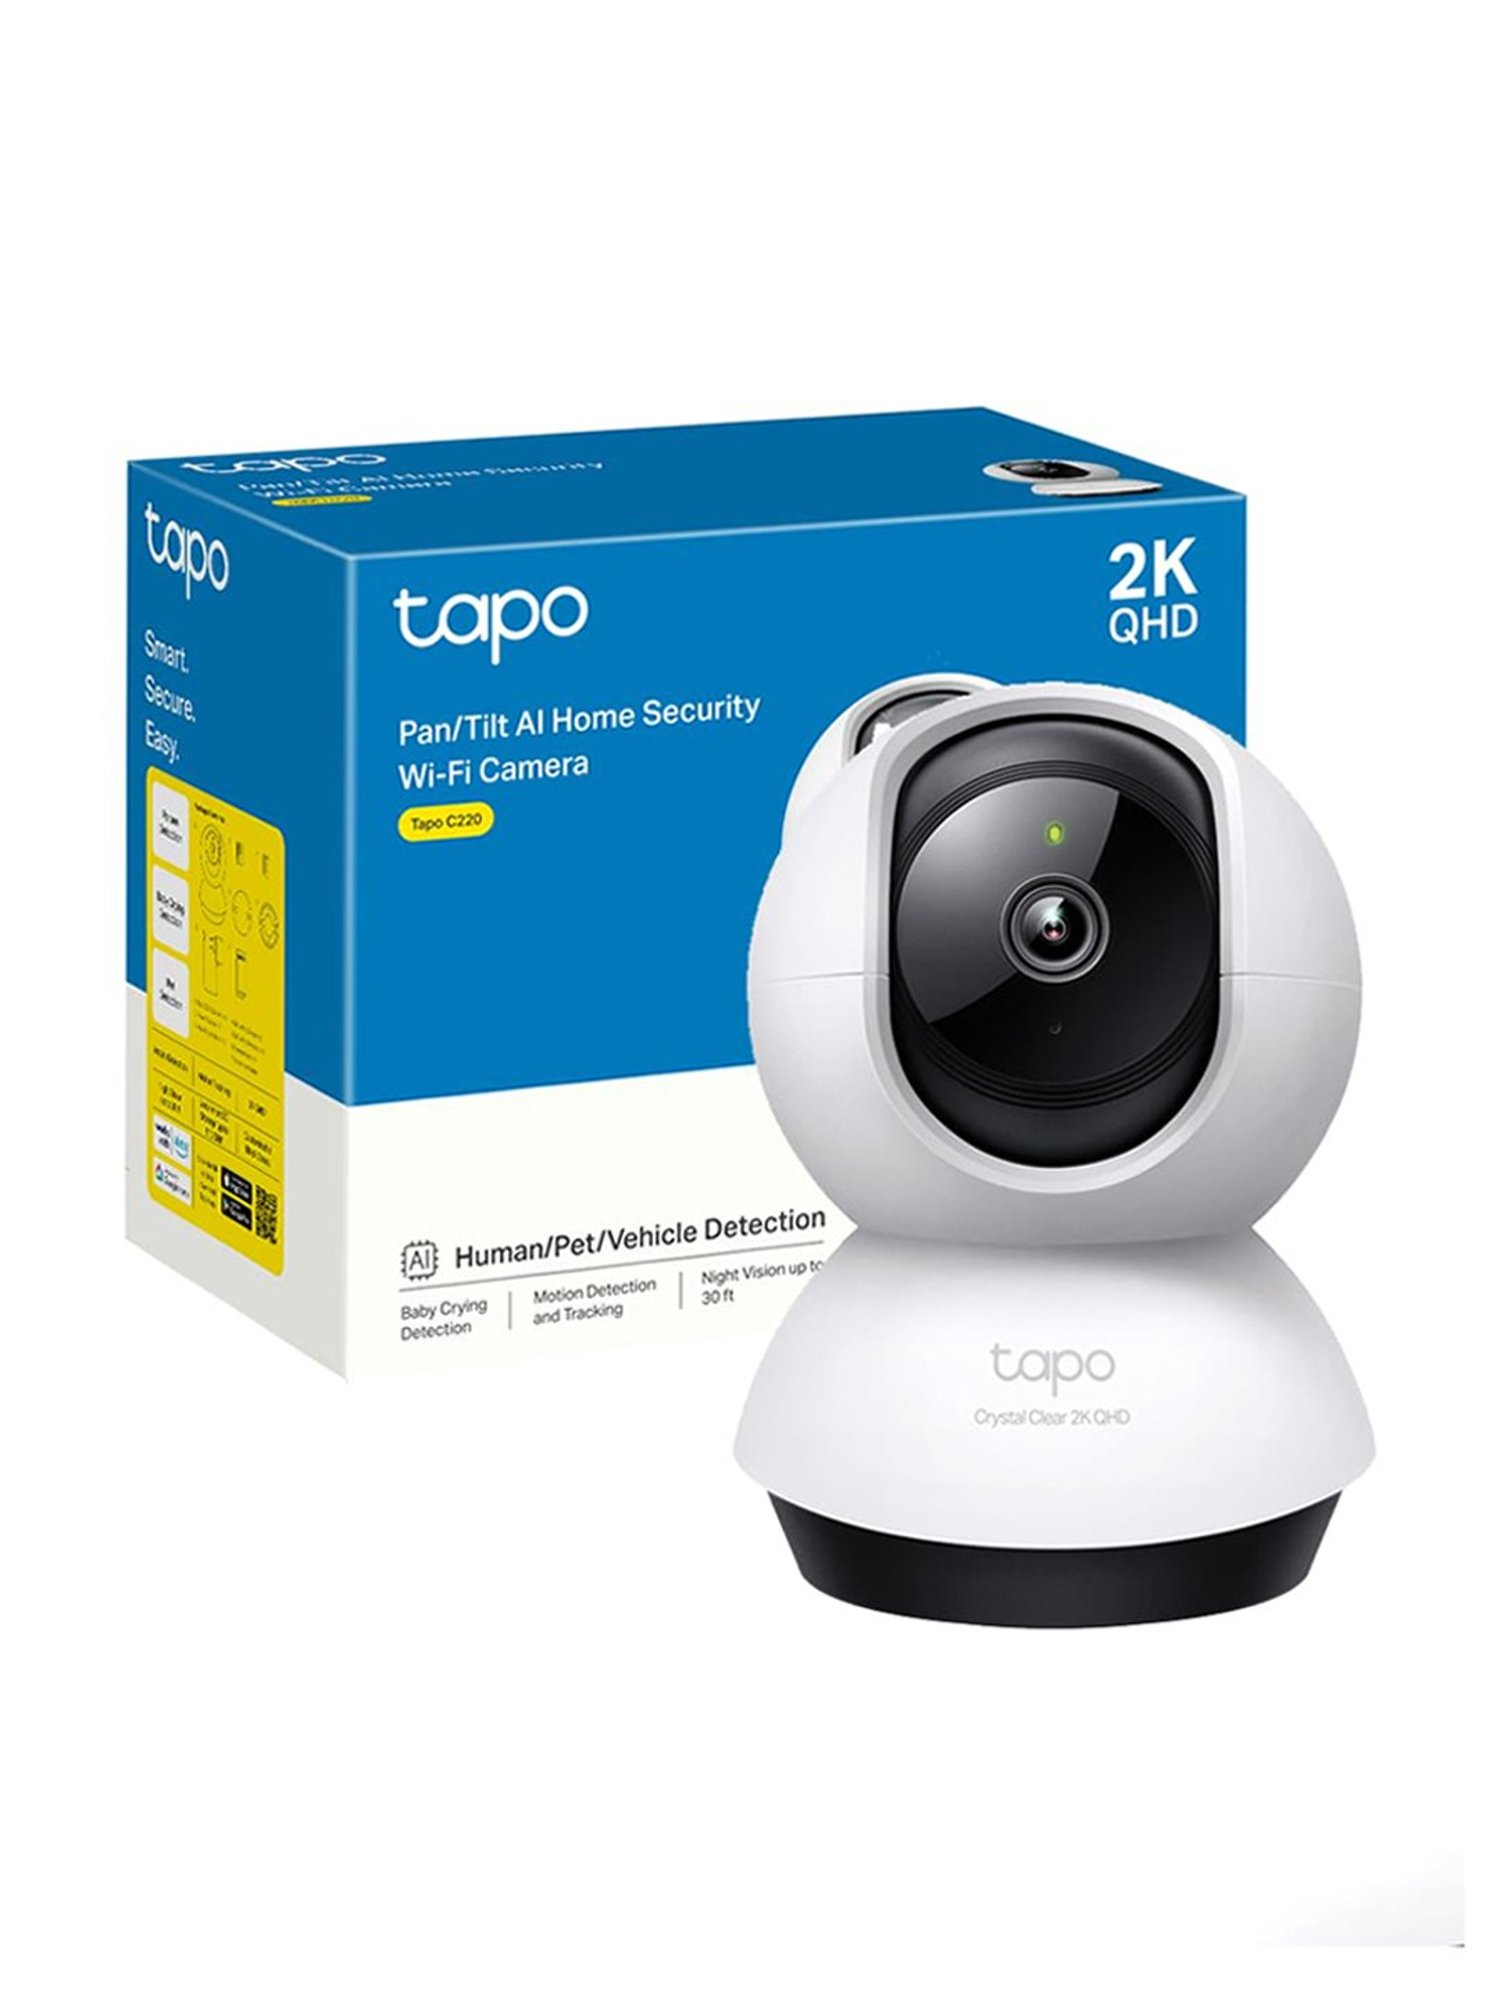 Buy Ipohonline TP-Link Tapo C220 2K 4MP QHD Pan Tilt AI Home Security Wi-Fi  CCTV ONVIF IP Camera online